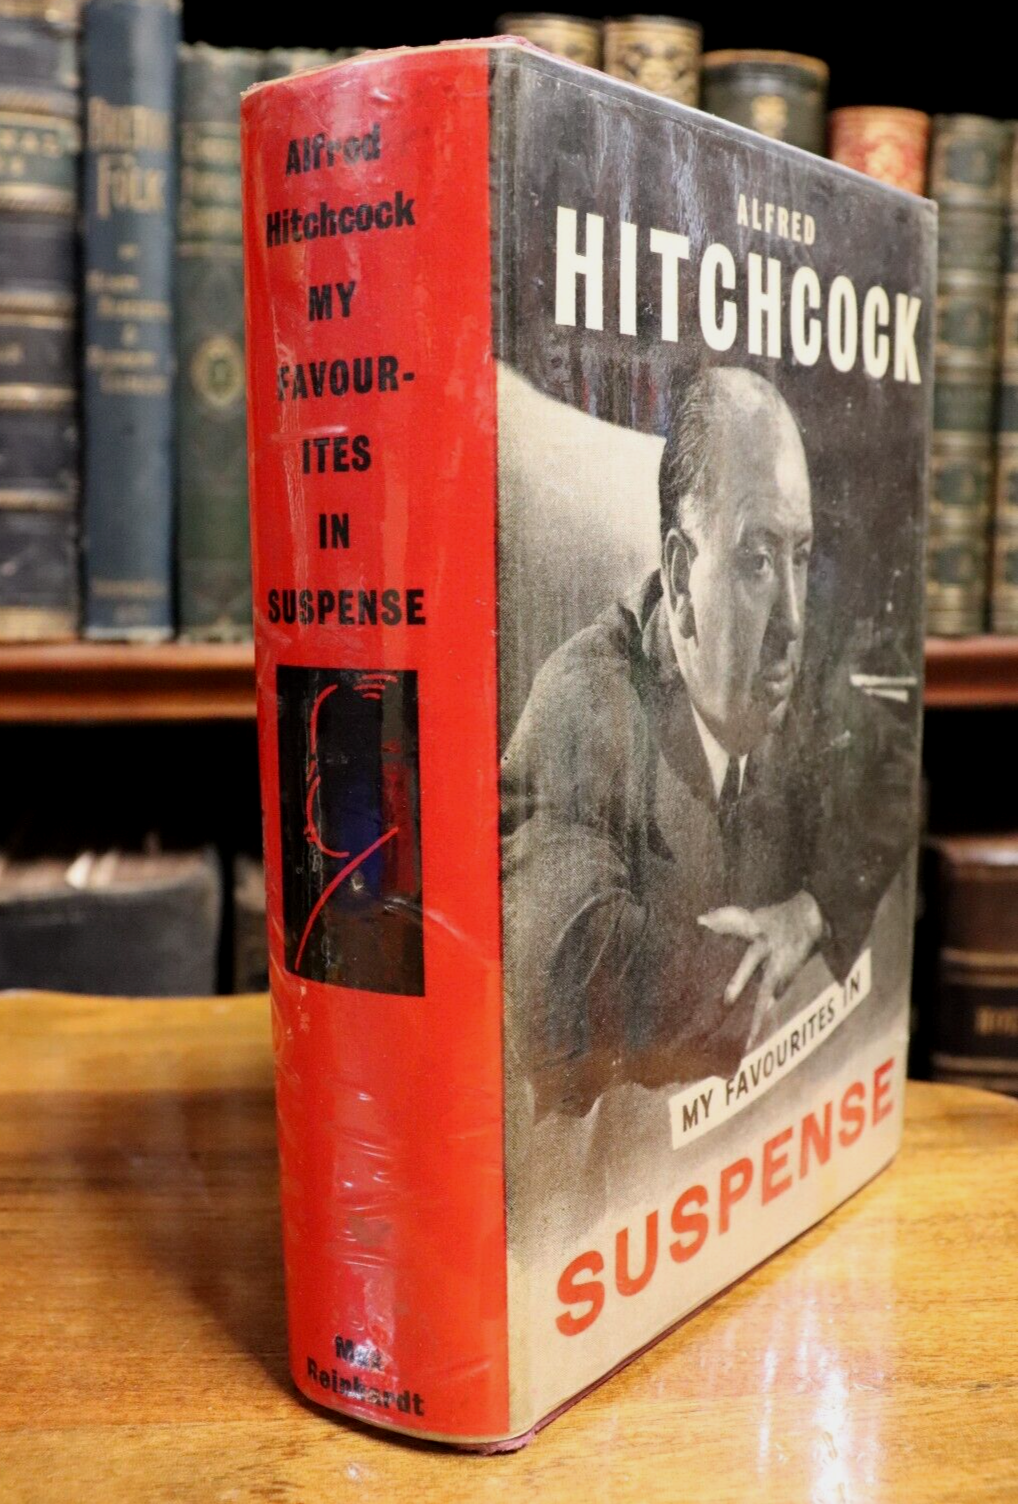 Alfred Hitchcock: My Favourites In Suspense - 1960 - Classic Literature Book